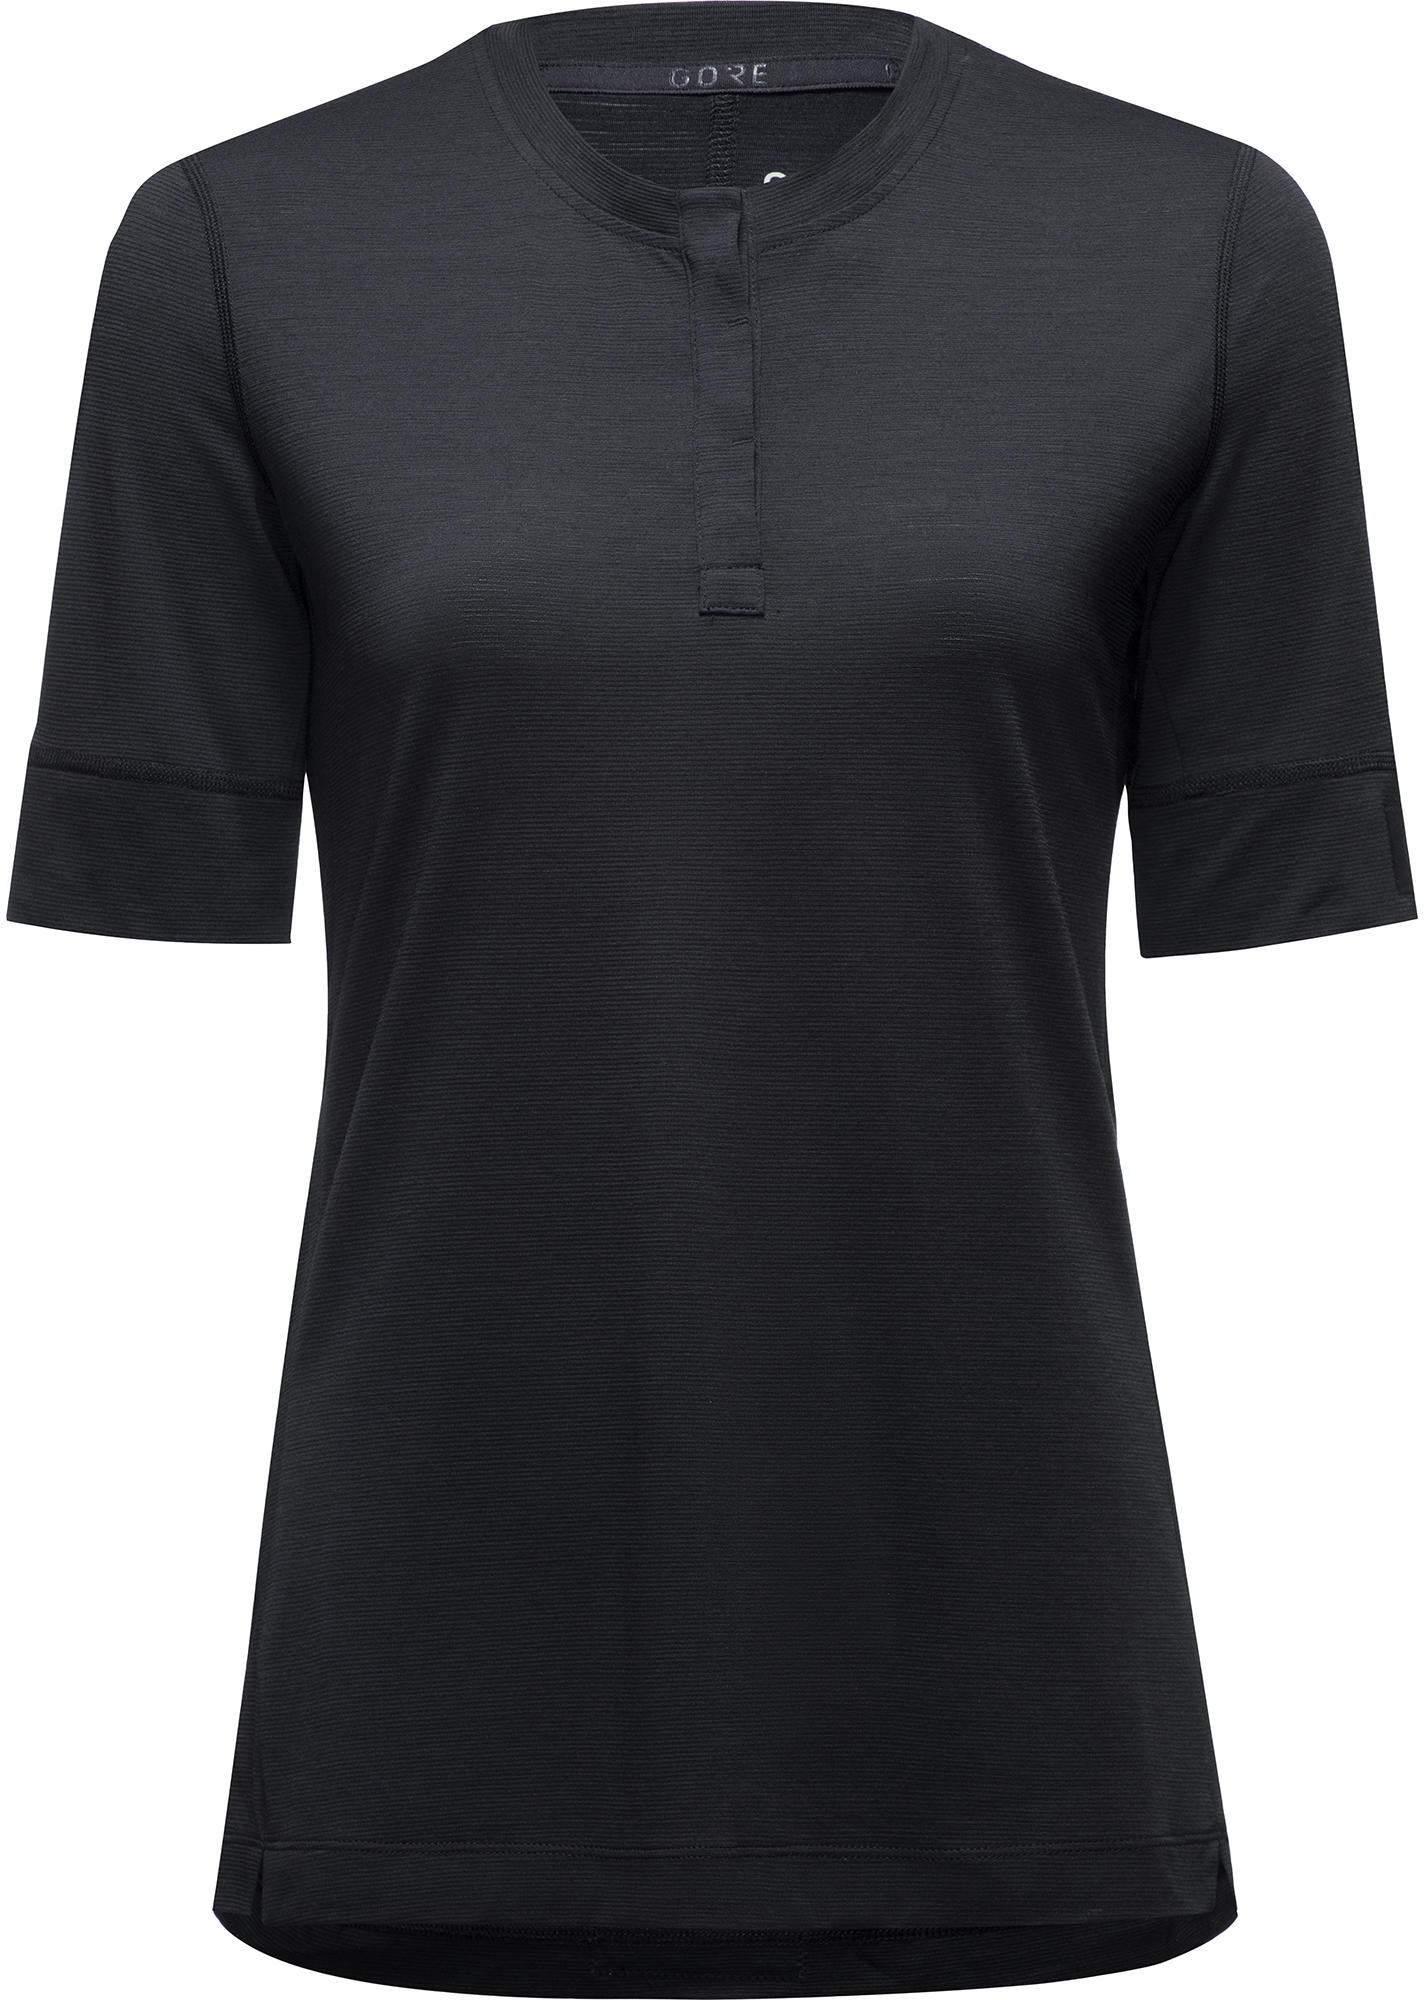 GORE® Wear Explore Shirt Damen black S/38